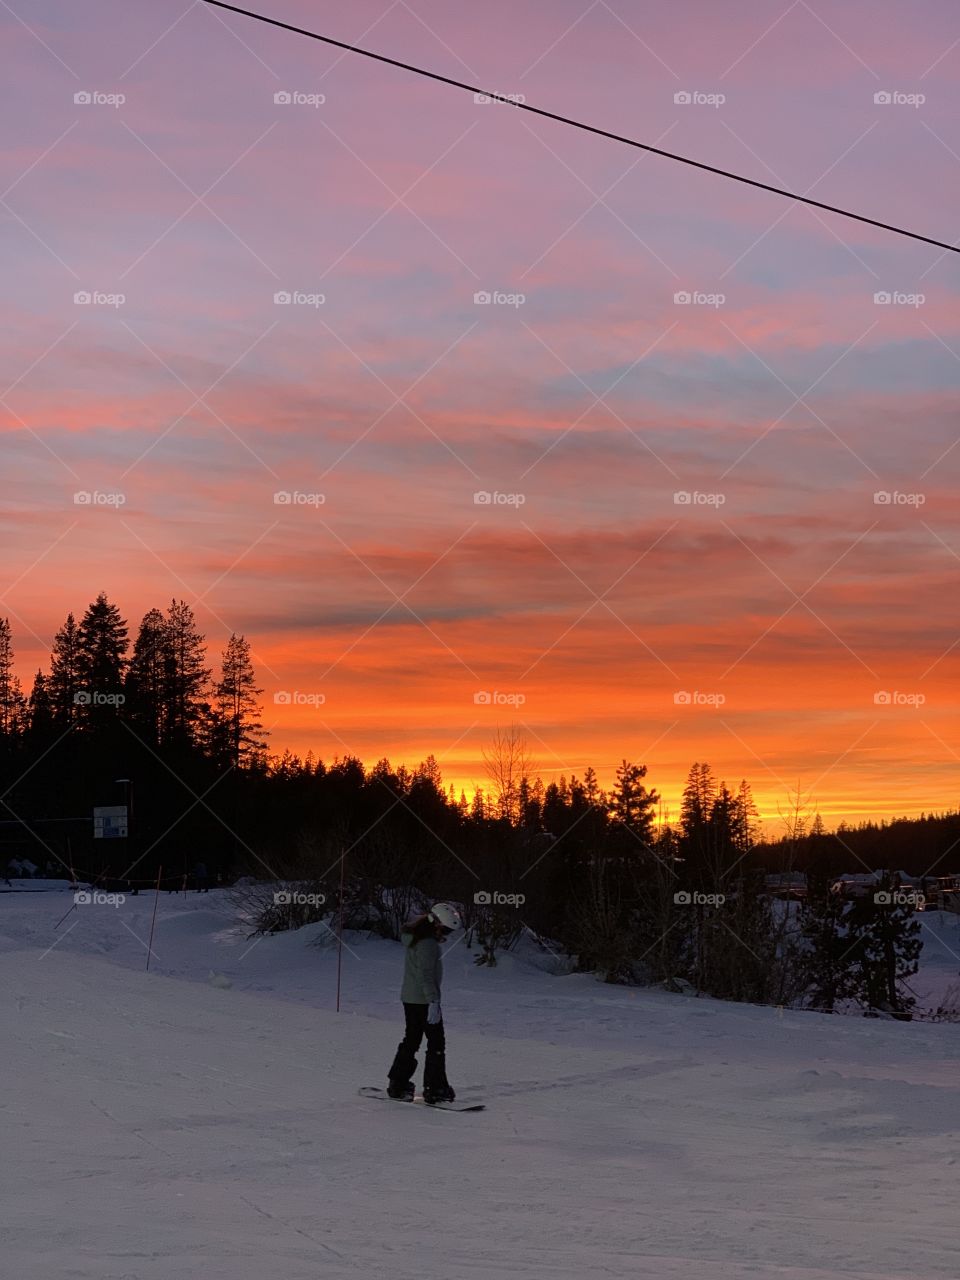 Beautiful California sunset with snowboarding